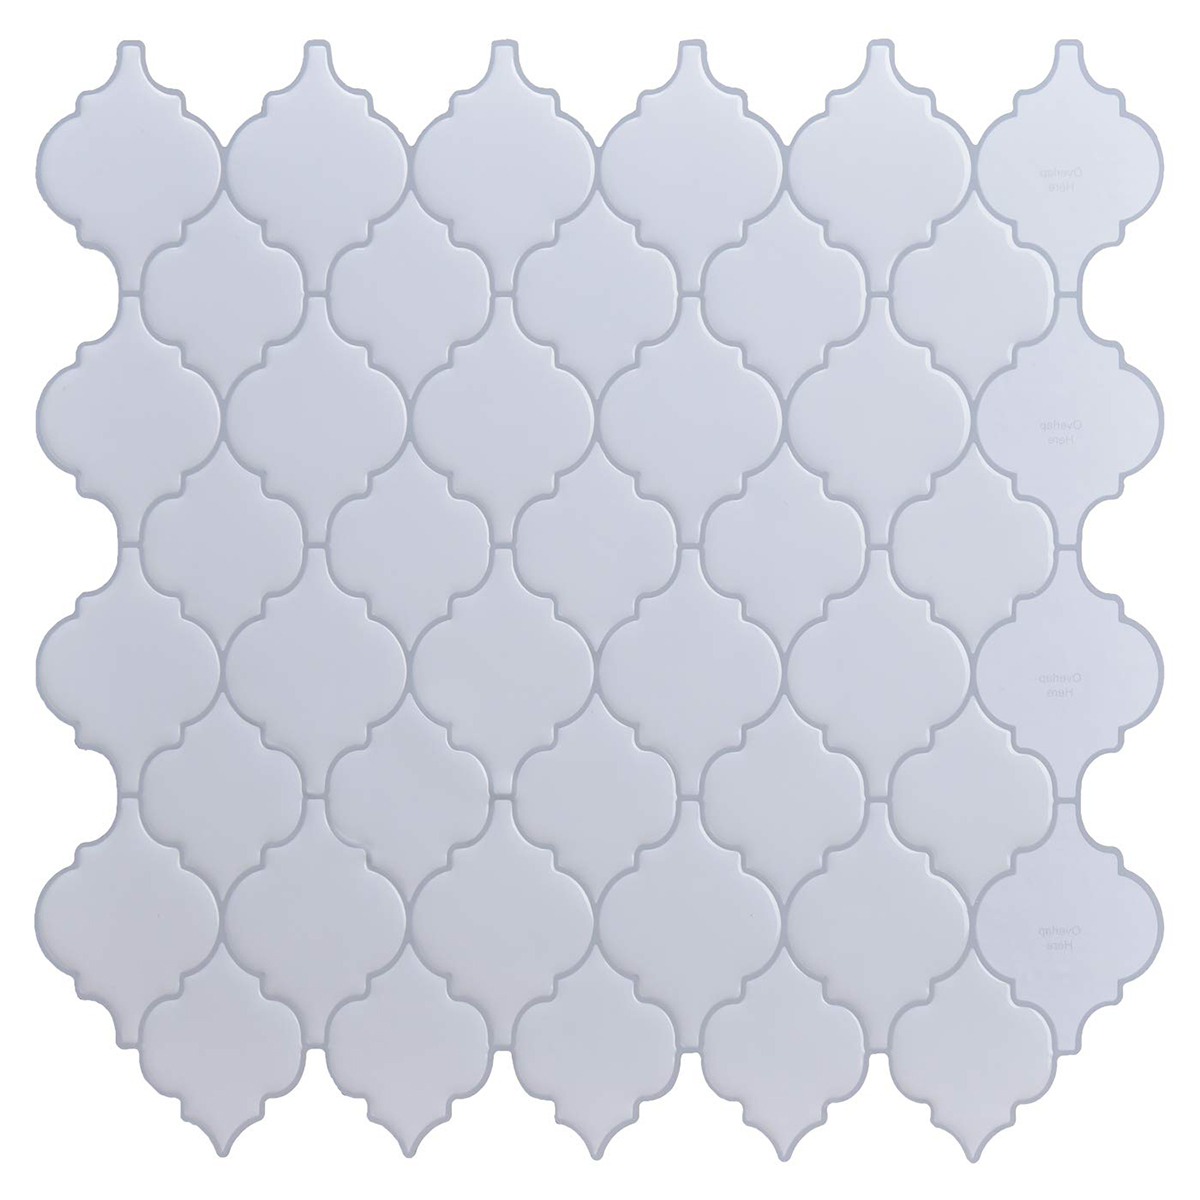 Art3d 10 Sheets Peel and Stick Tile Backsplash for Kitchen White Arabesque Backsplash Tile